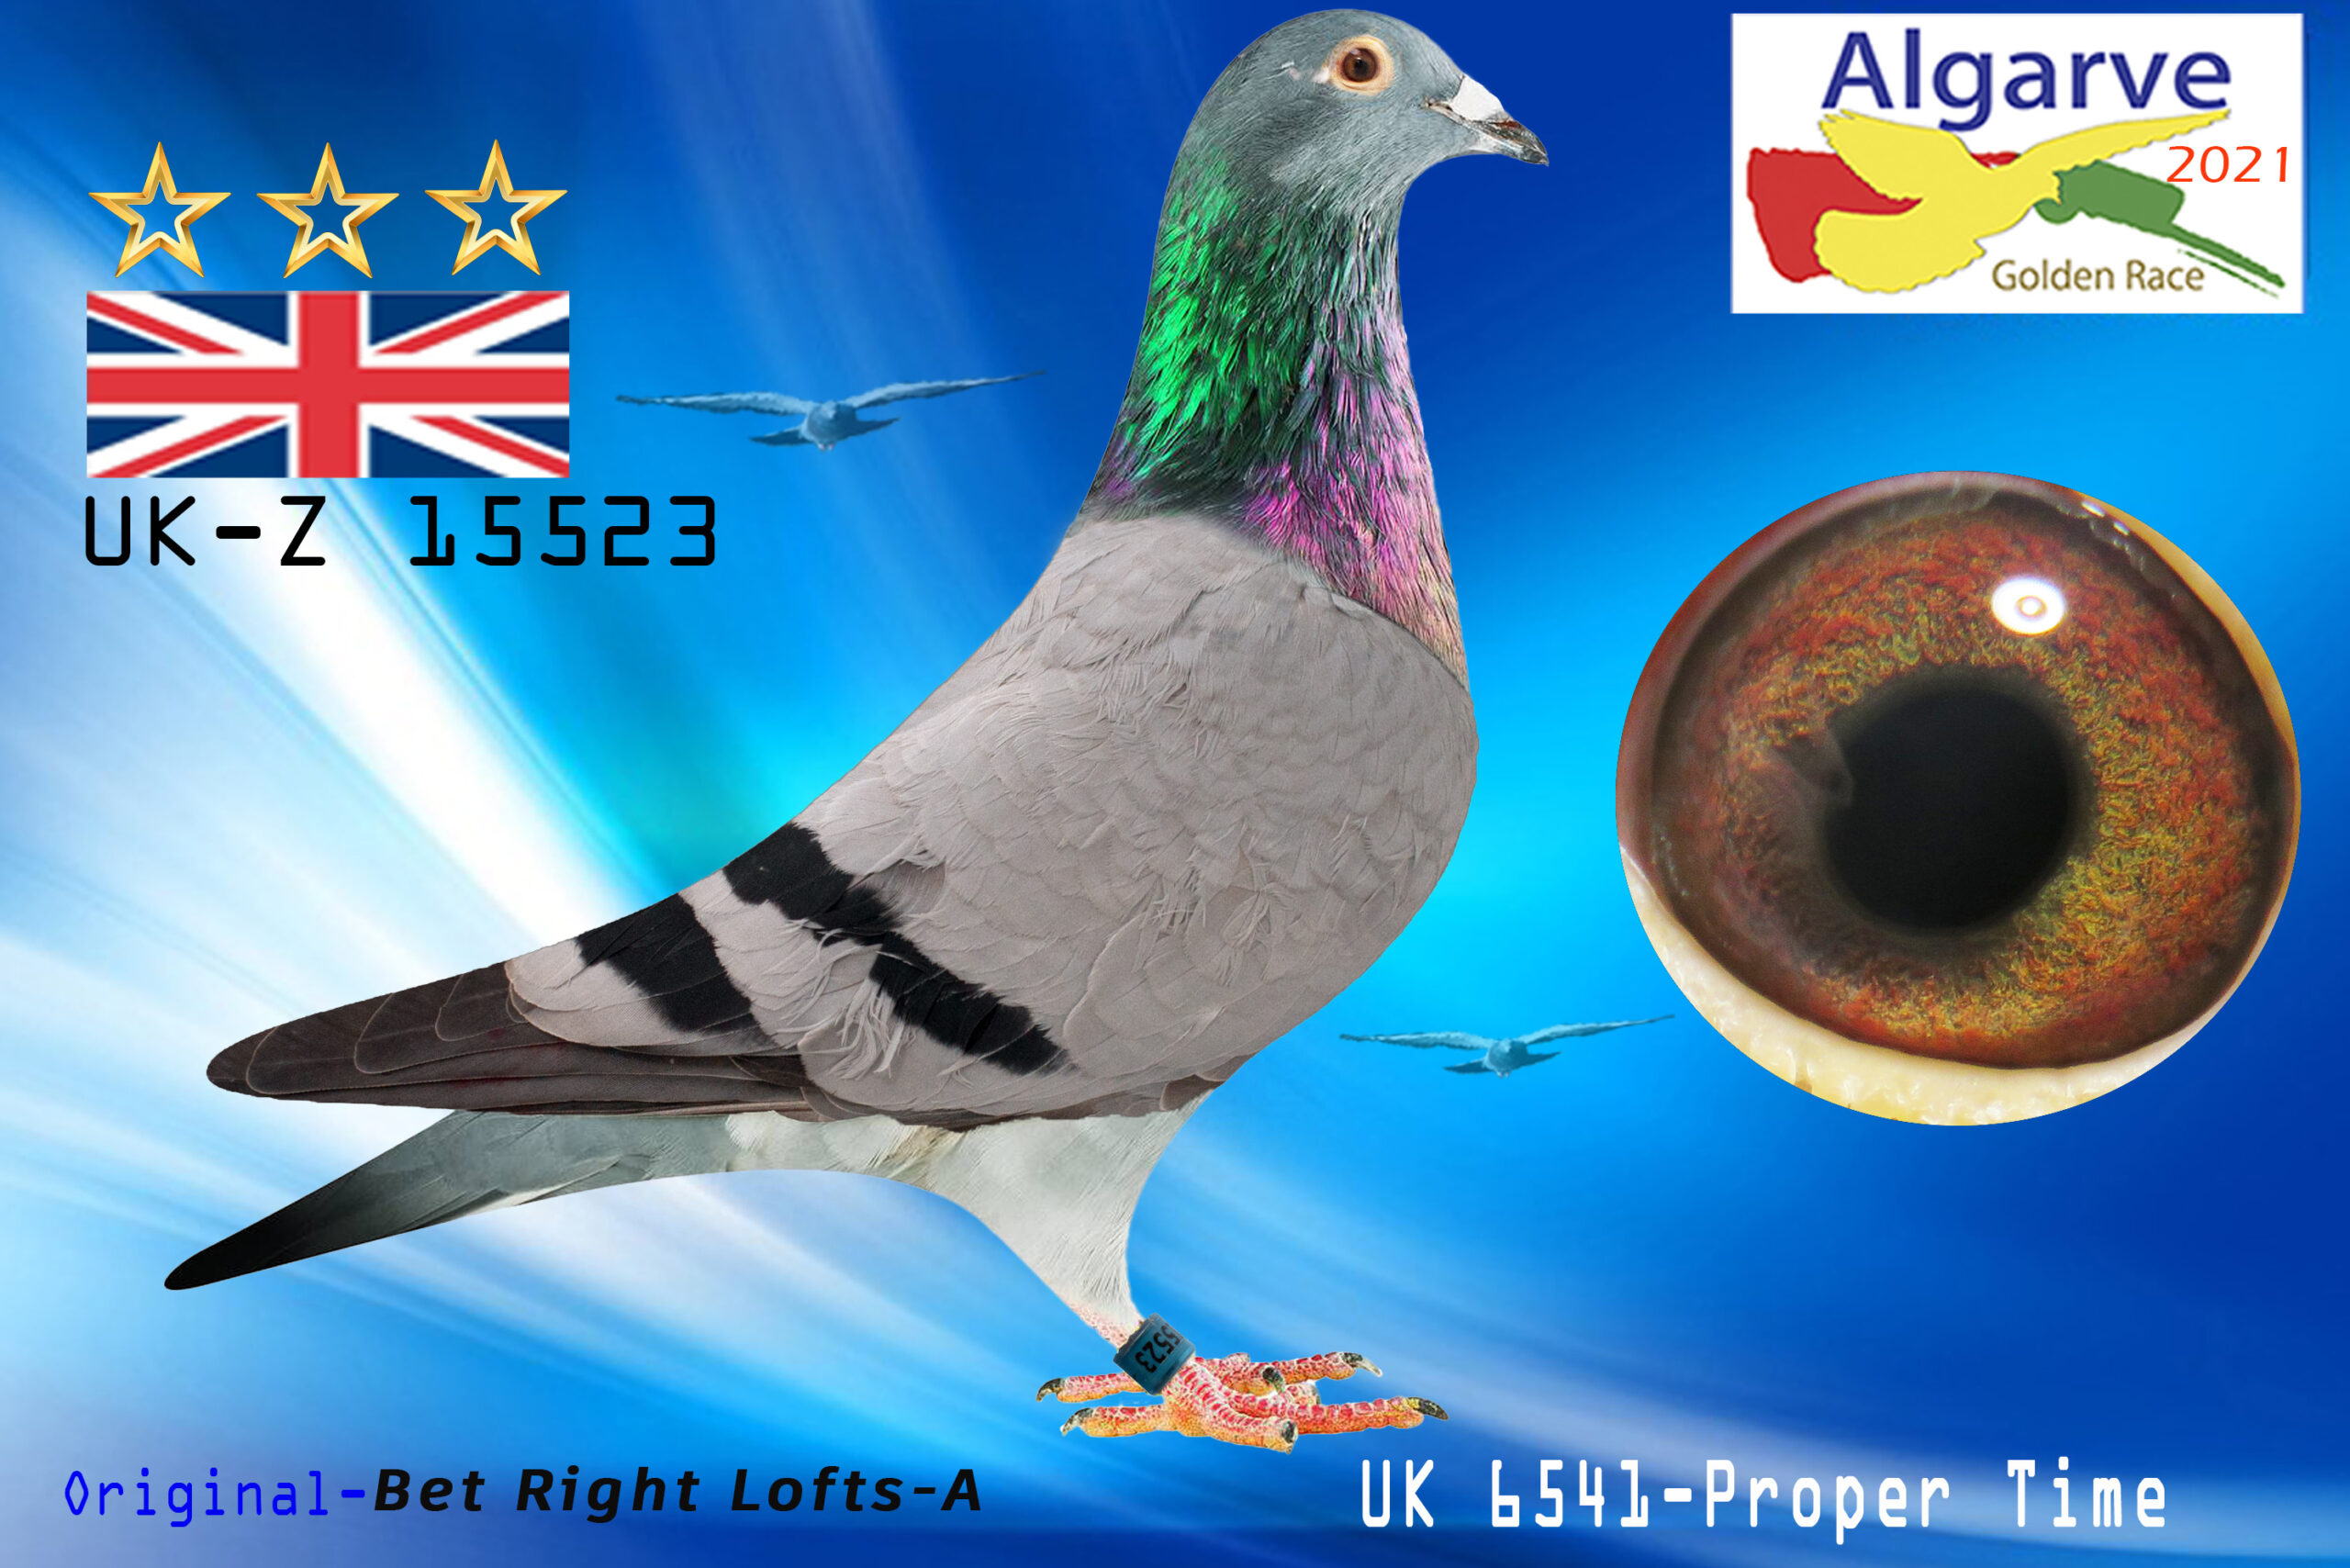 UK-Z 15523/21 - HEMBRA - Bet Right Lofts-A - 2419º CLASIFICADA